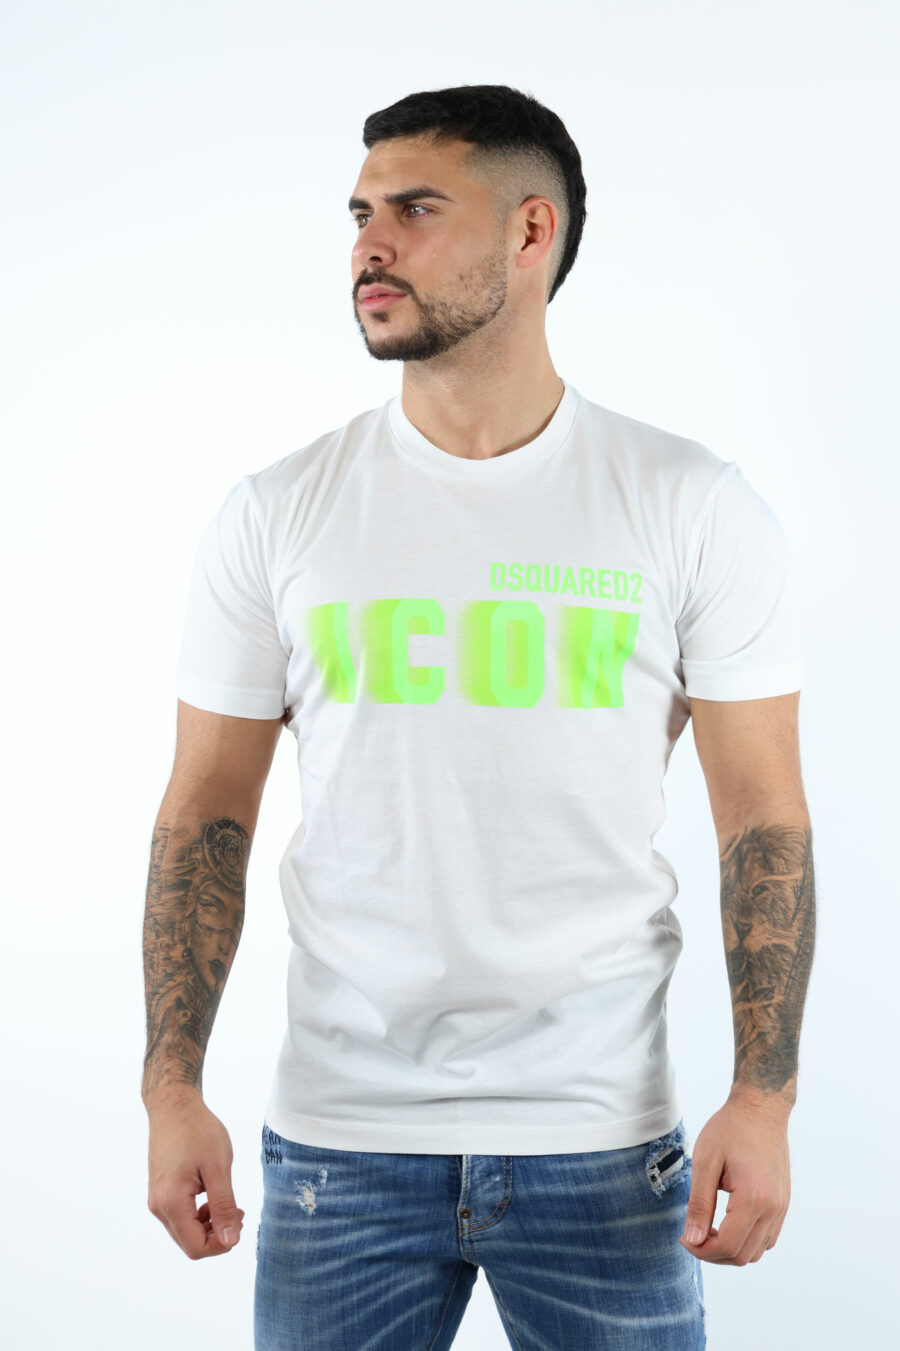 Camiseta blanca con maxilogo "icon" verde neon borroso - 106632